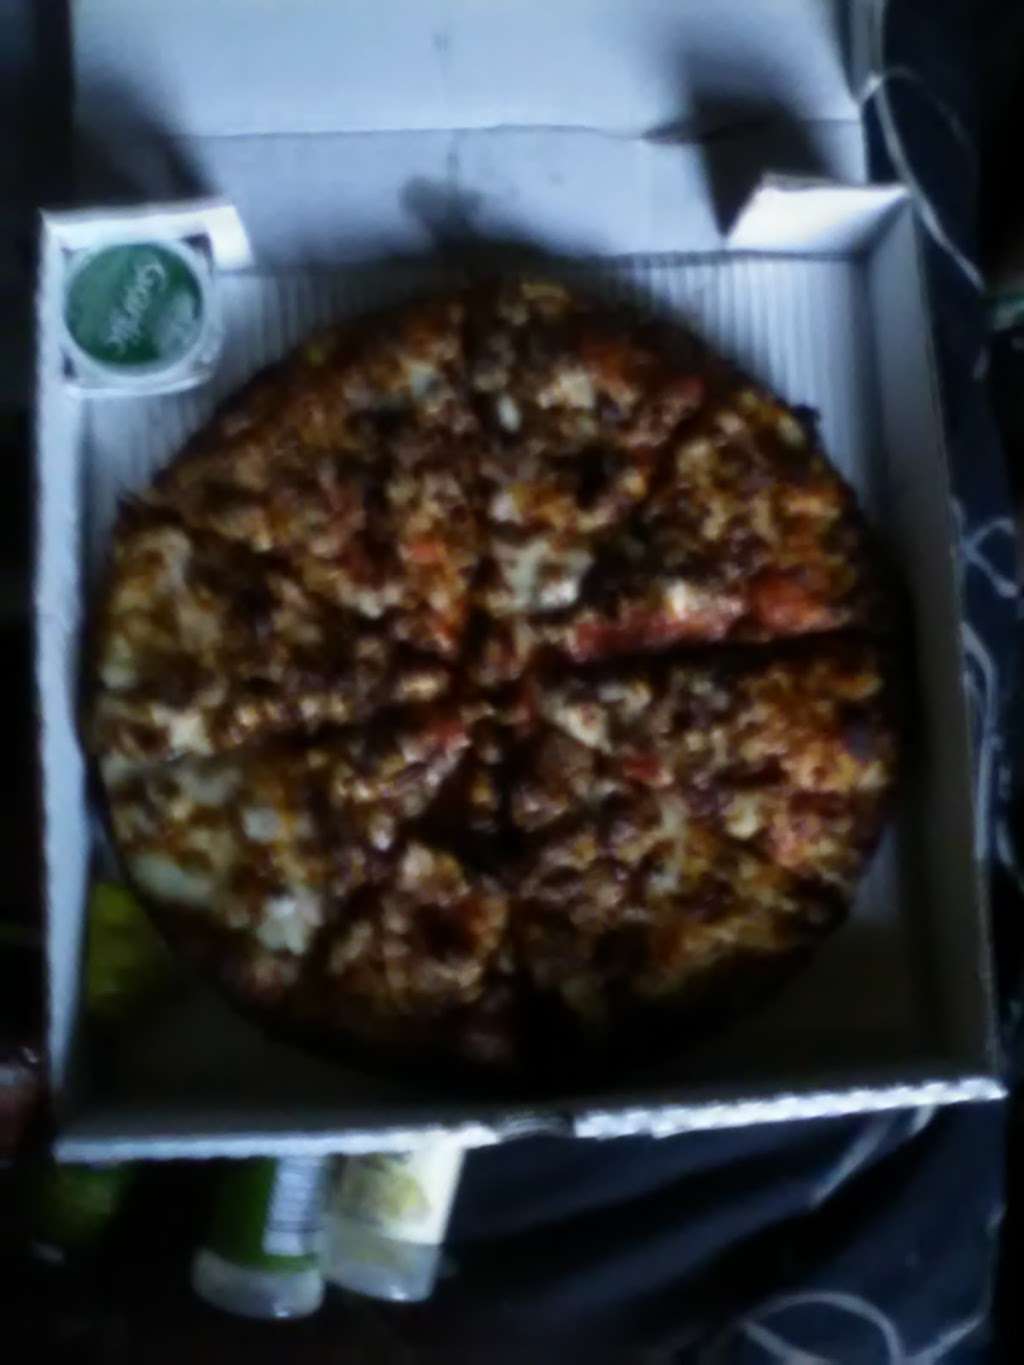 Papa Johns Pizza | 1180 N Black Horse Pike, Williamstown, NJ 08094, USA | Phone: (856) 728-8200